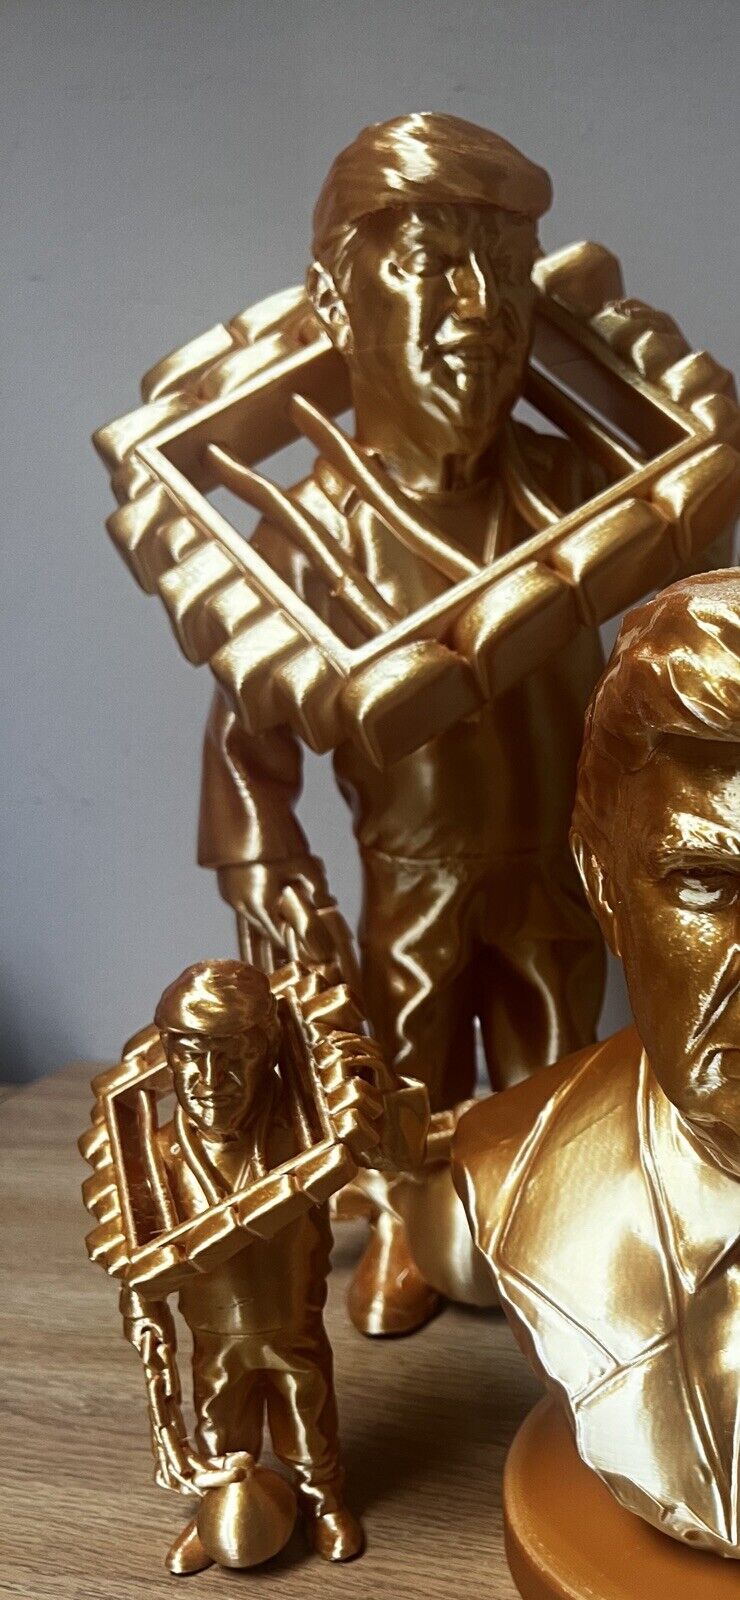 Gold Prison Break Trump Statue HUGE 241MM Tall Art piece DJT Escapes Tyranny